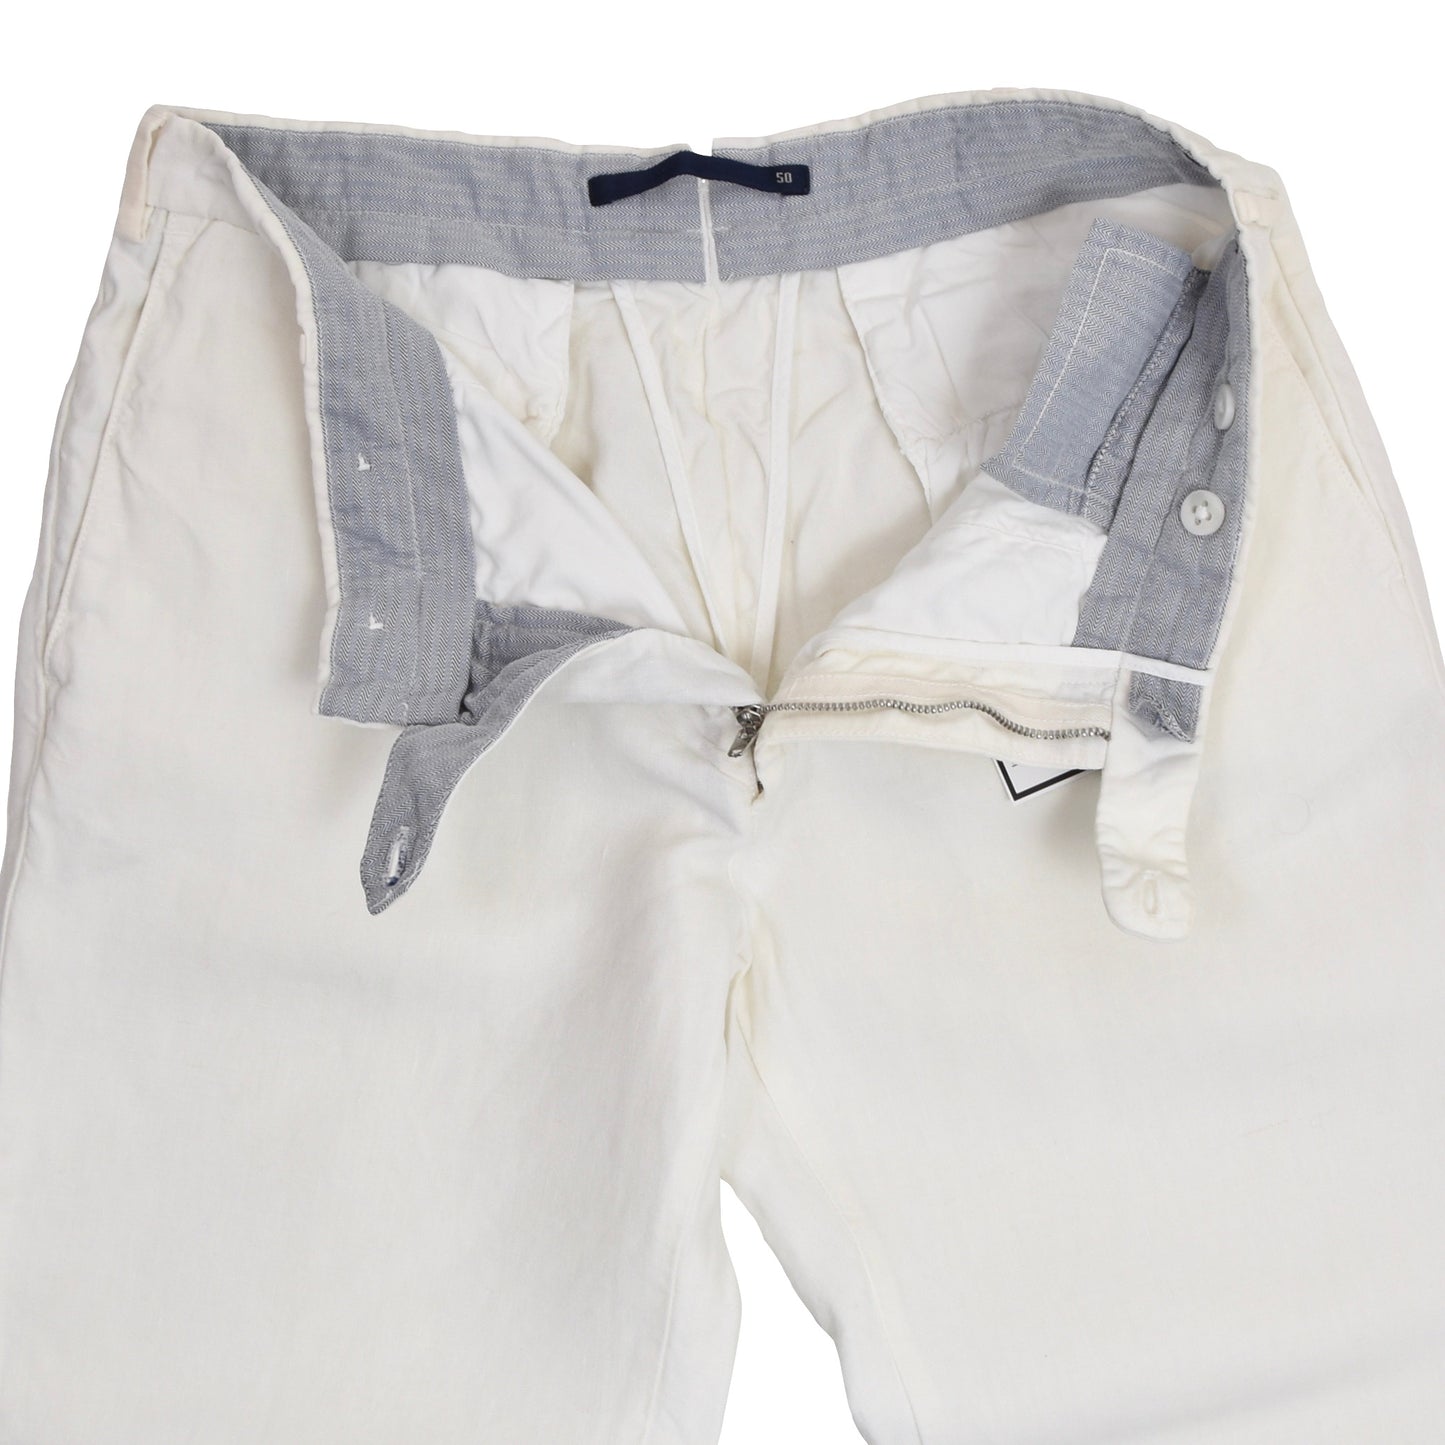 Incotex Linen Pants Size 50 - White